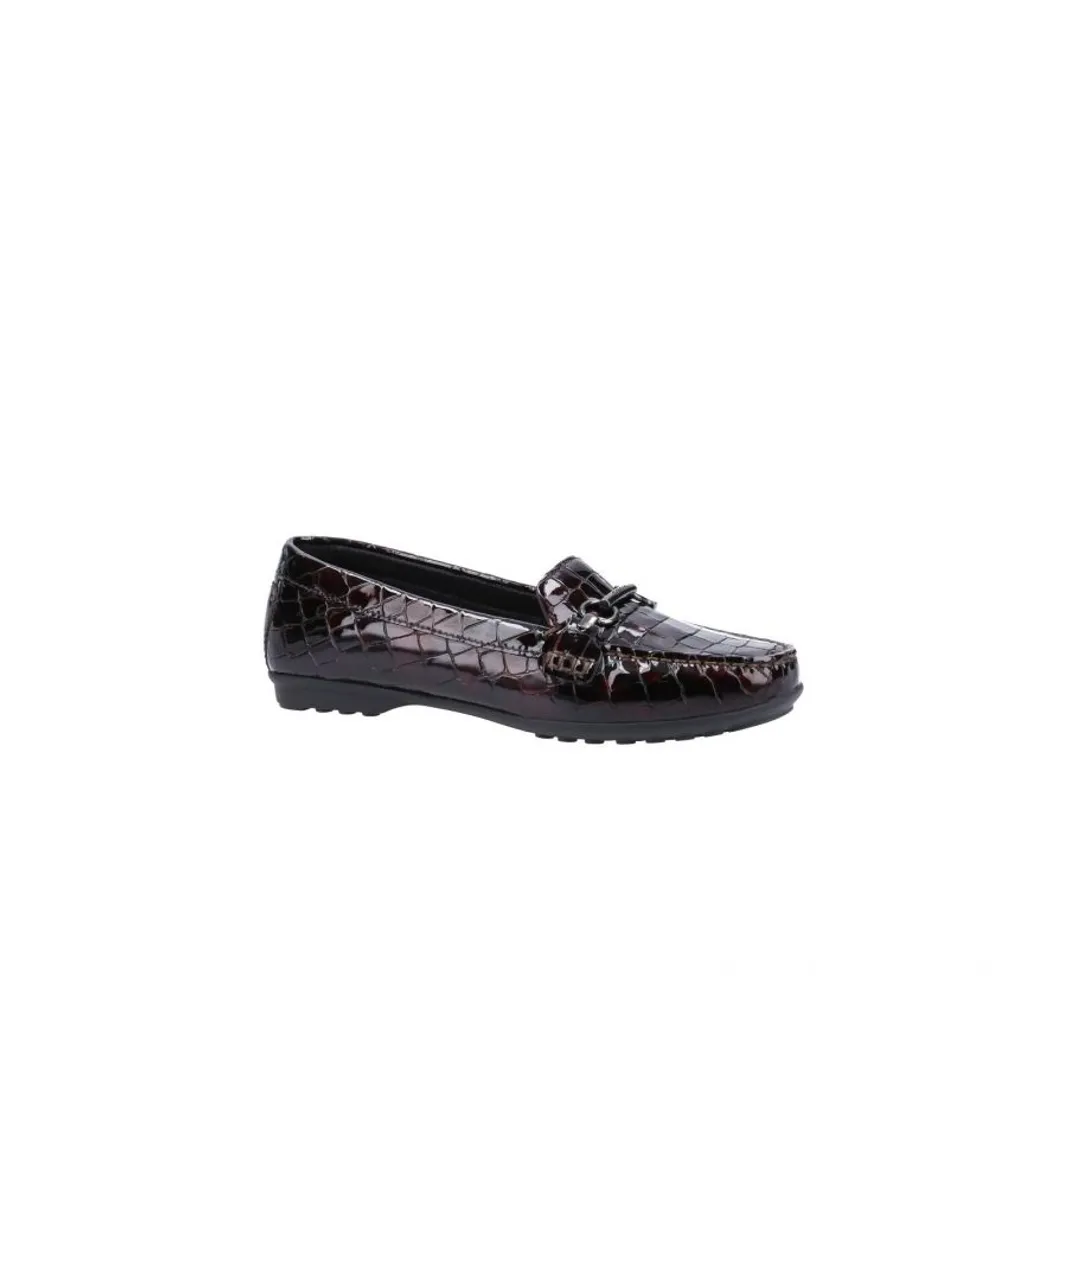 Geox Womens Elidia Slip On Ladies Shoes - Black